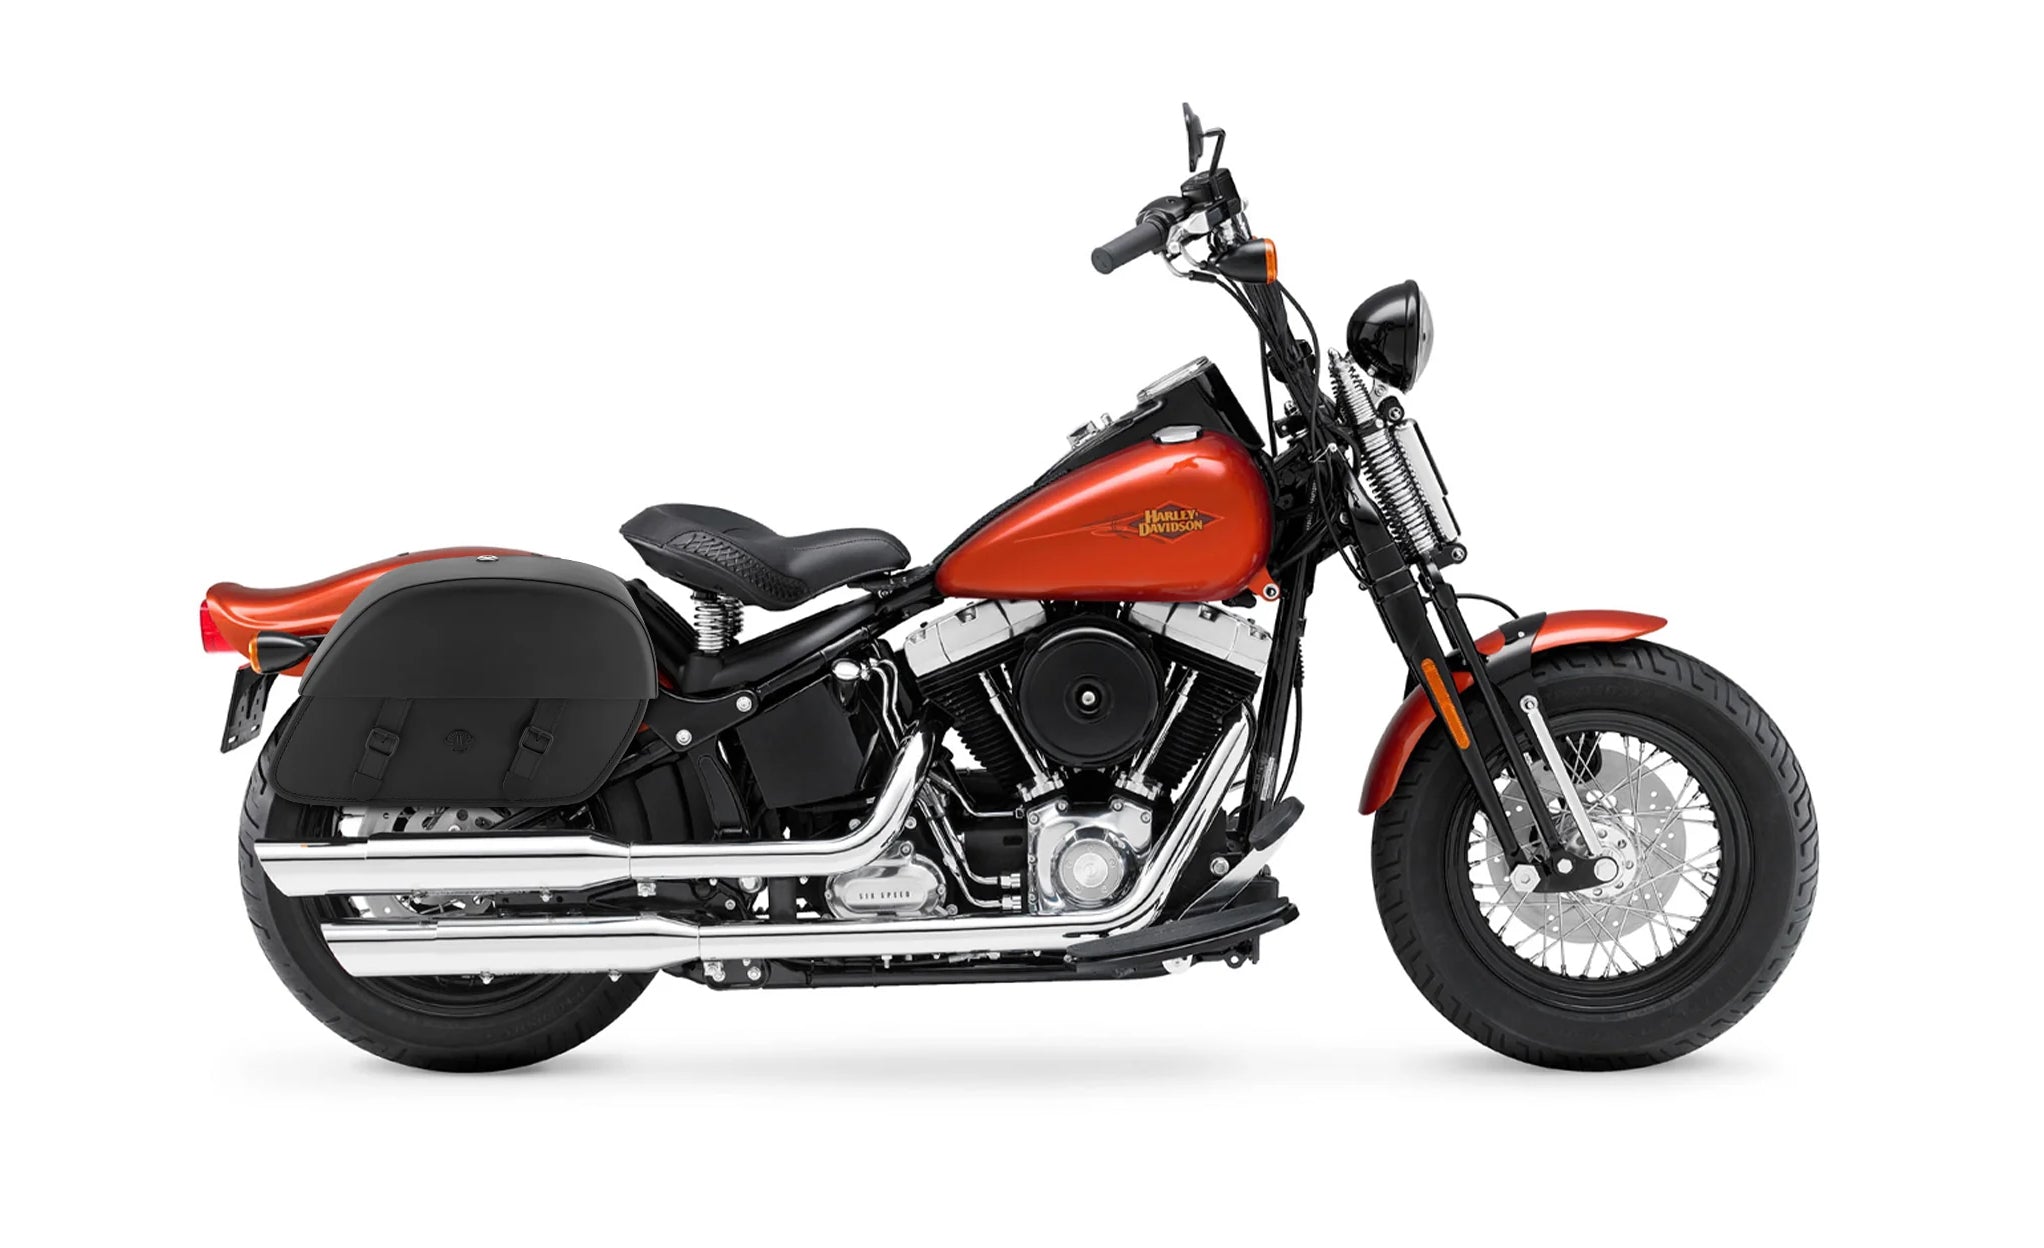 28L - Baelor Medium Motorcycle Saddlebags for Harley Softail Cross Bones FLSTSB @expand